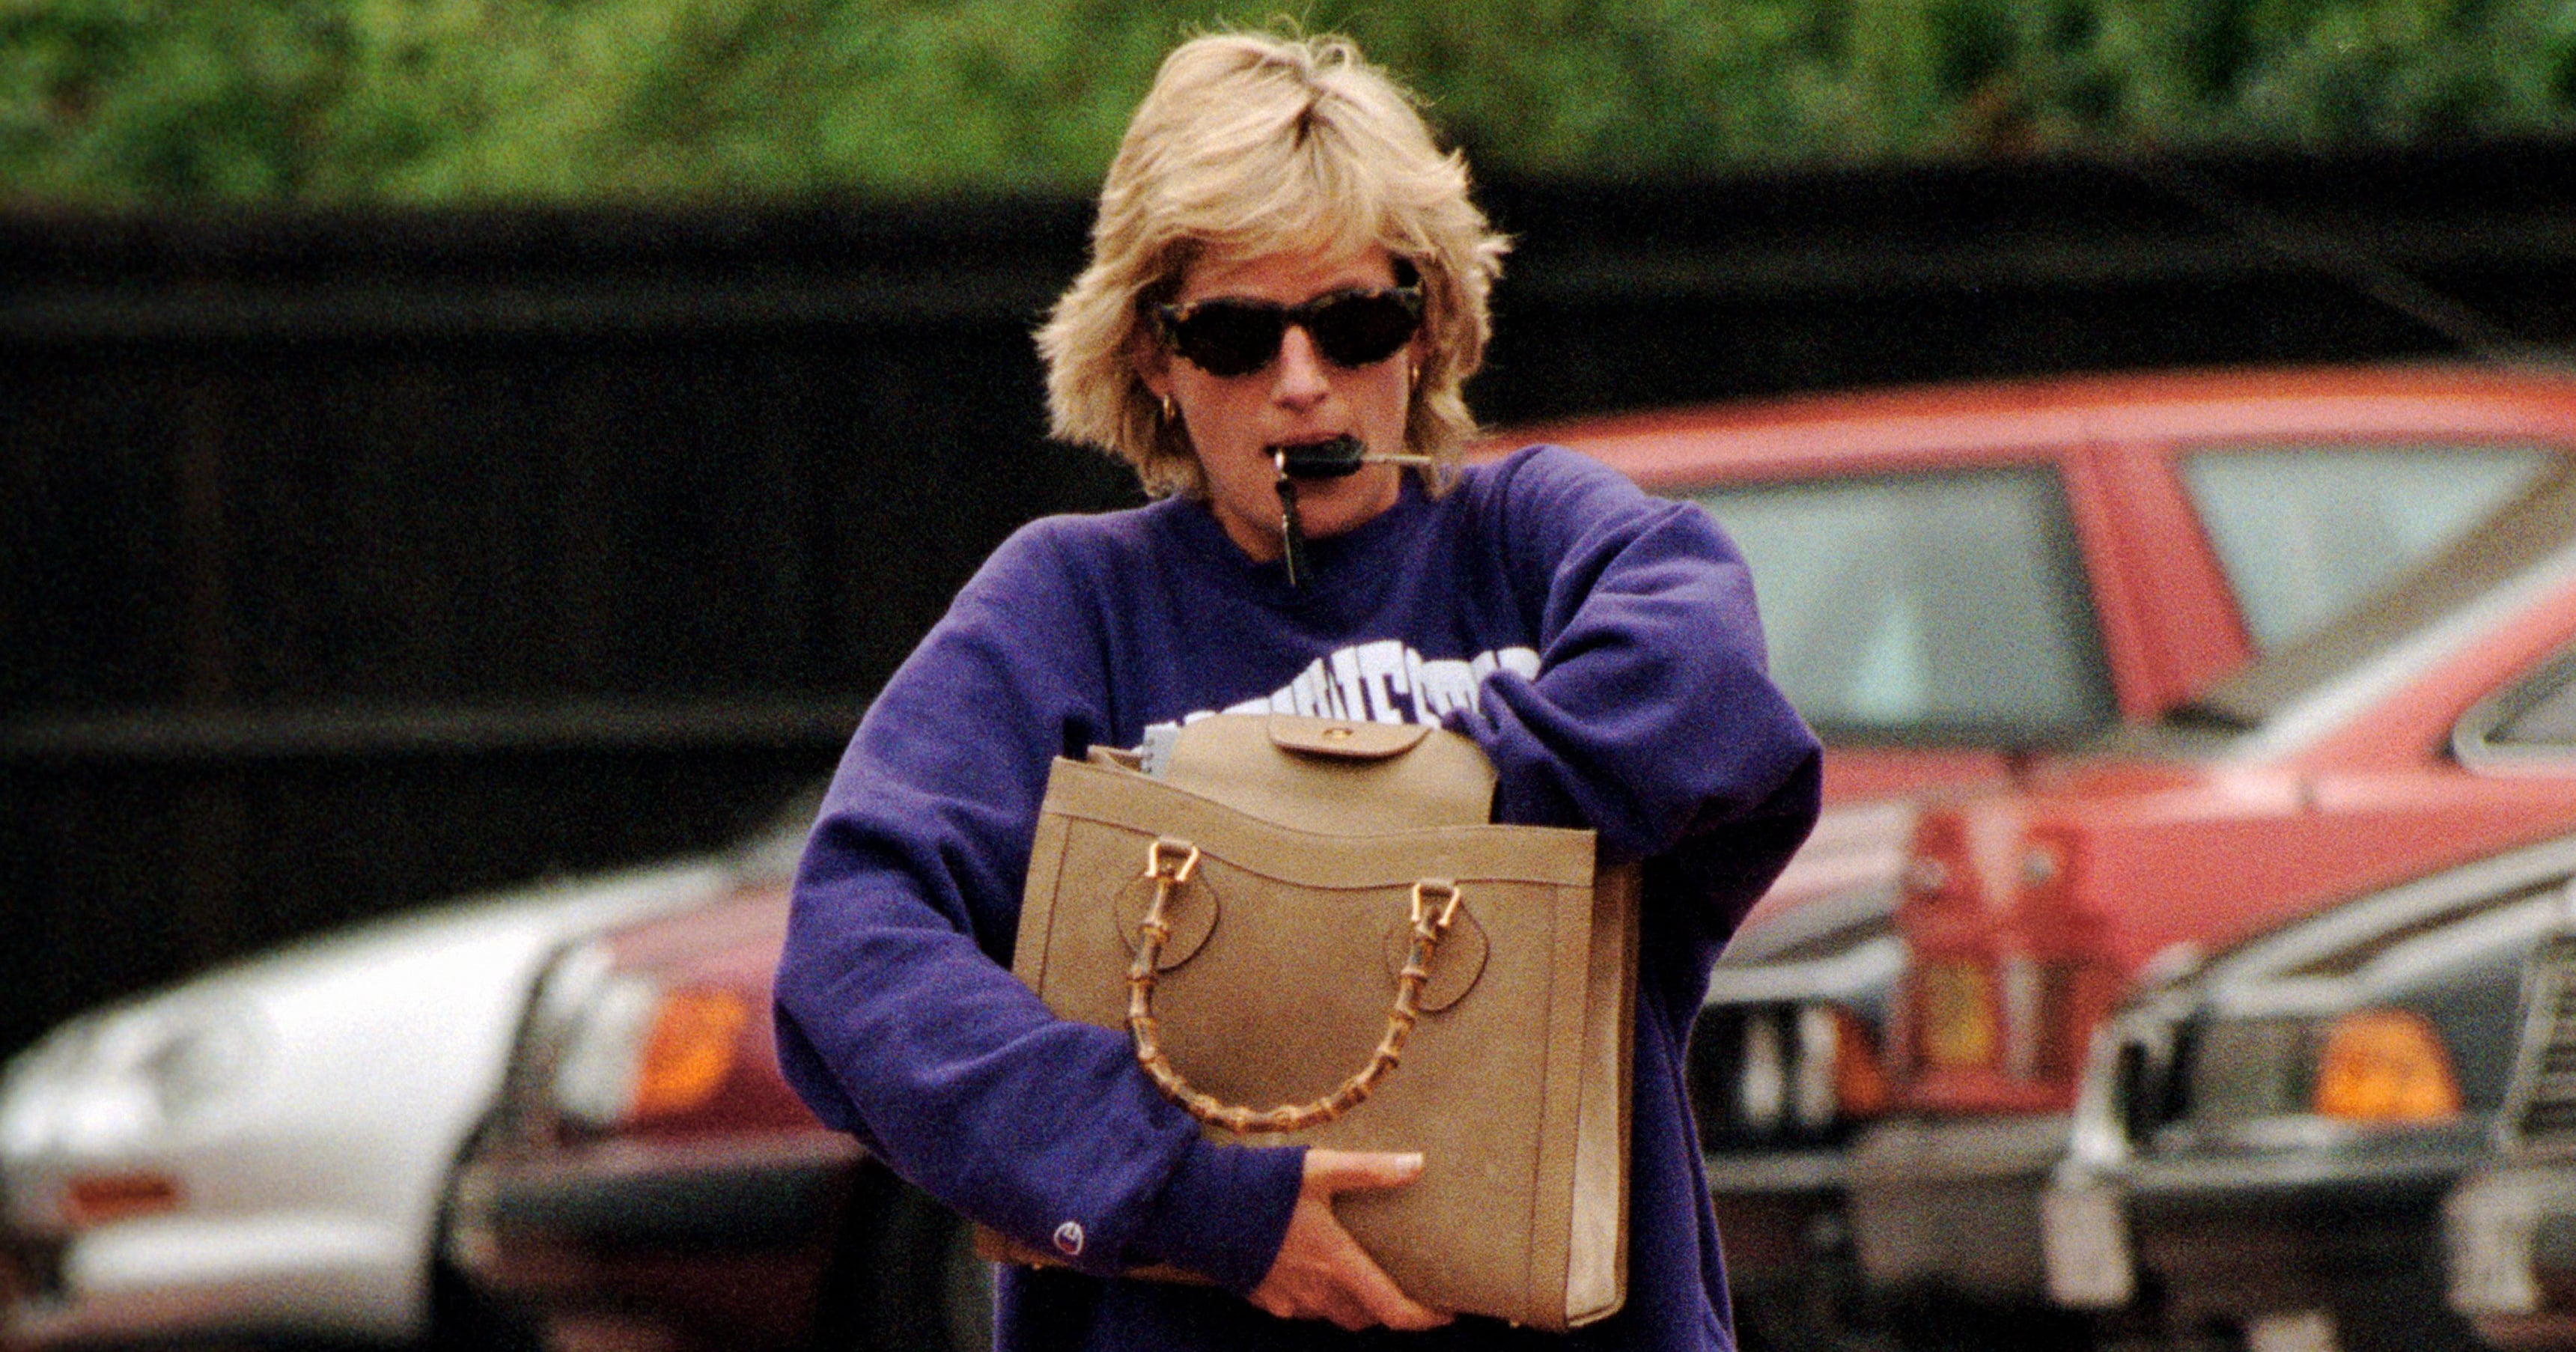 Gucci Is Reviving Princess Diana's Favourite Bag